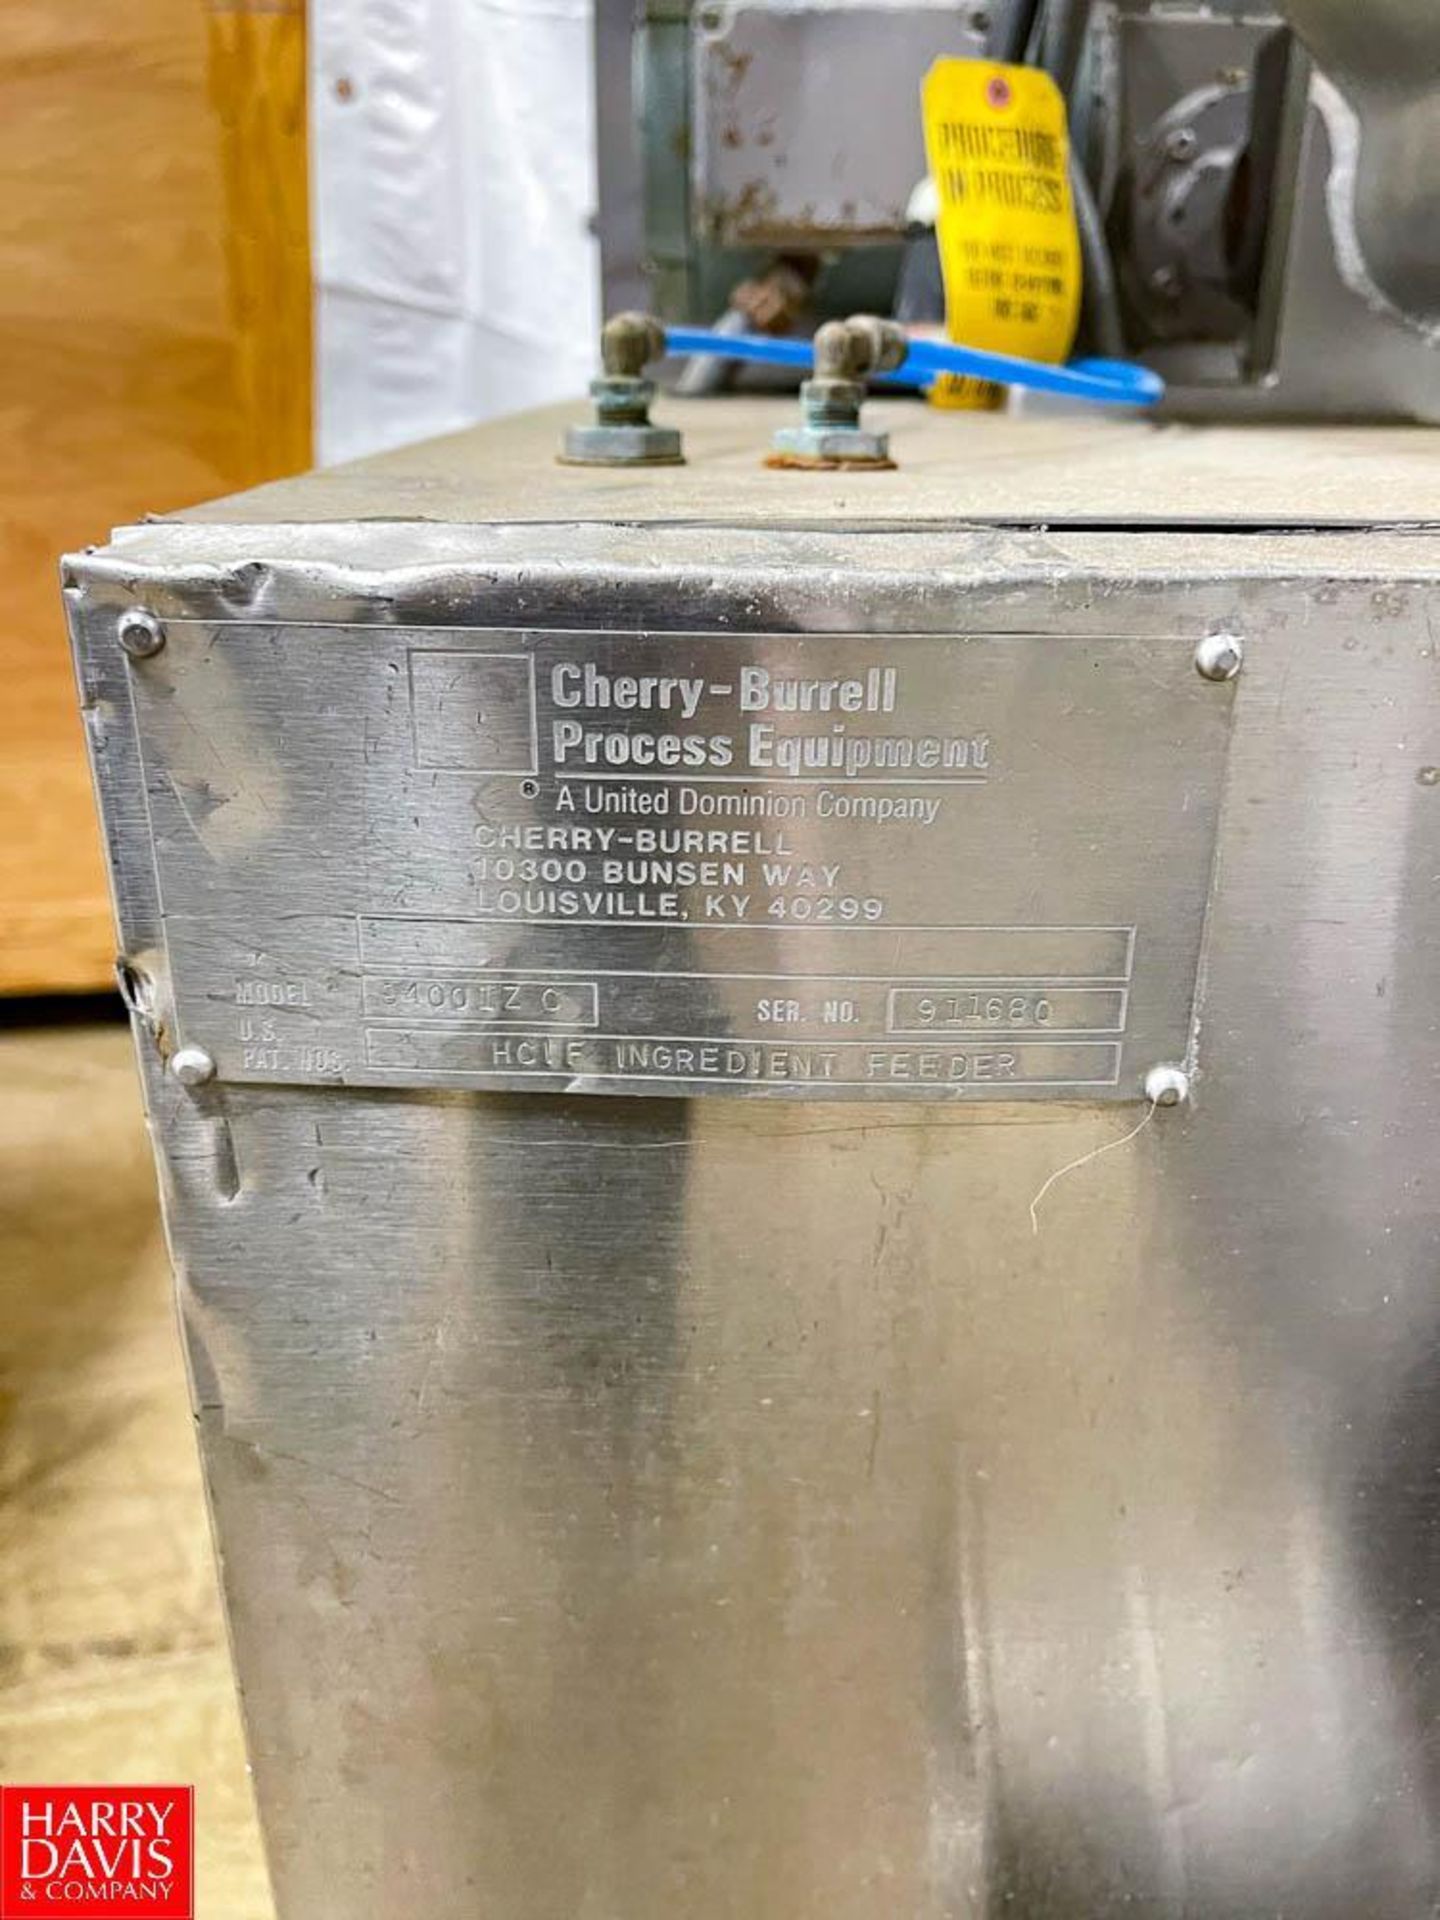 Cherry-Burrell S/S Ingredient Feeder, Model: 940012C, S/N: 911680 - Rigging Fee: $250 - Image 2 of 2